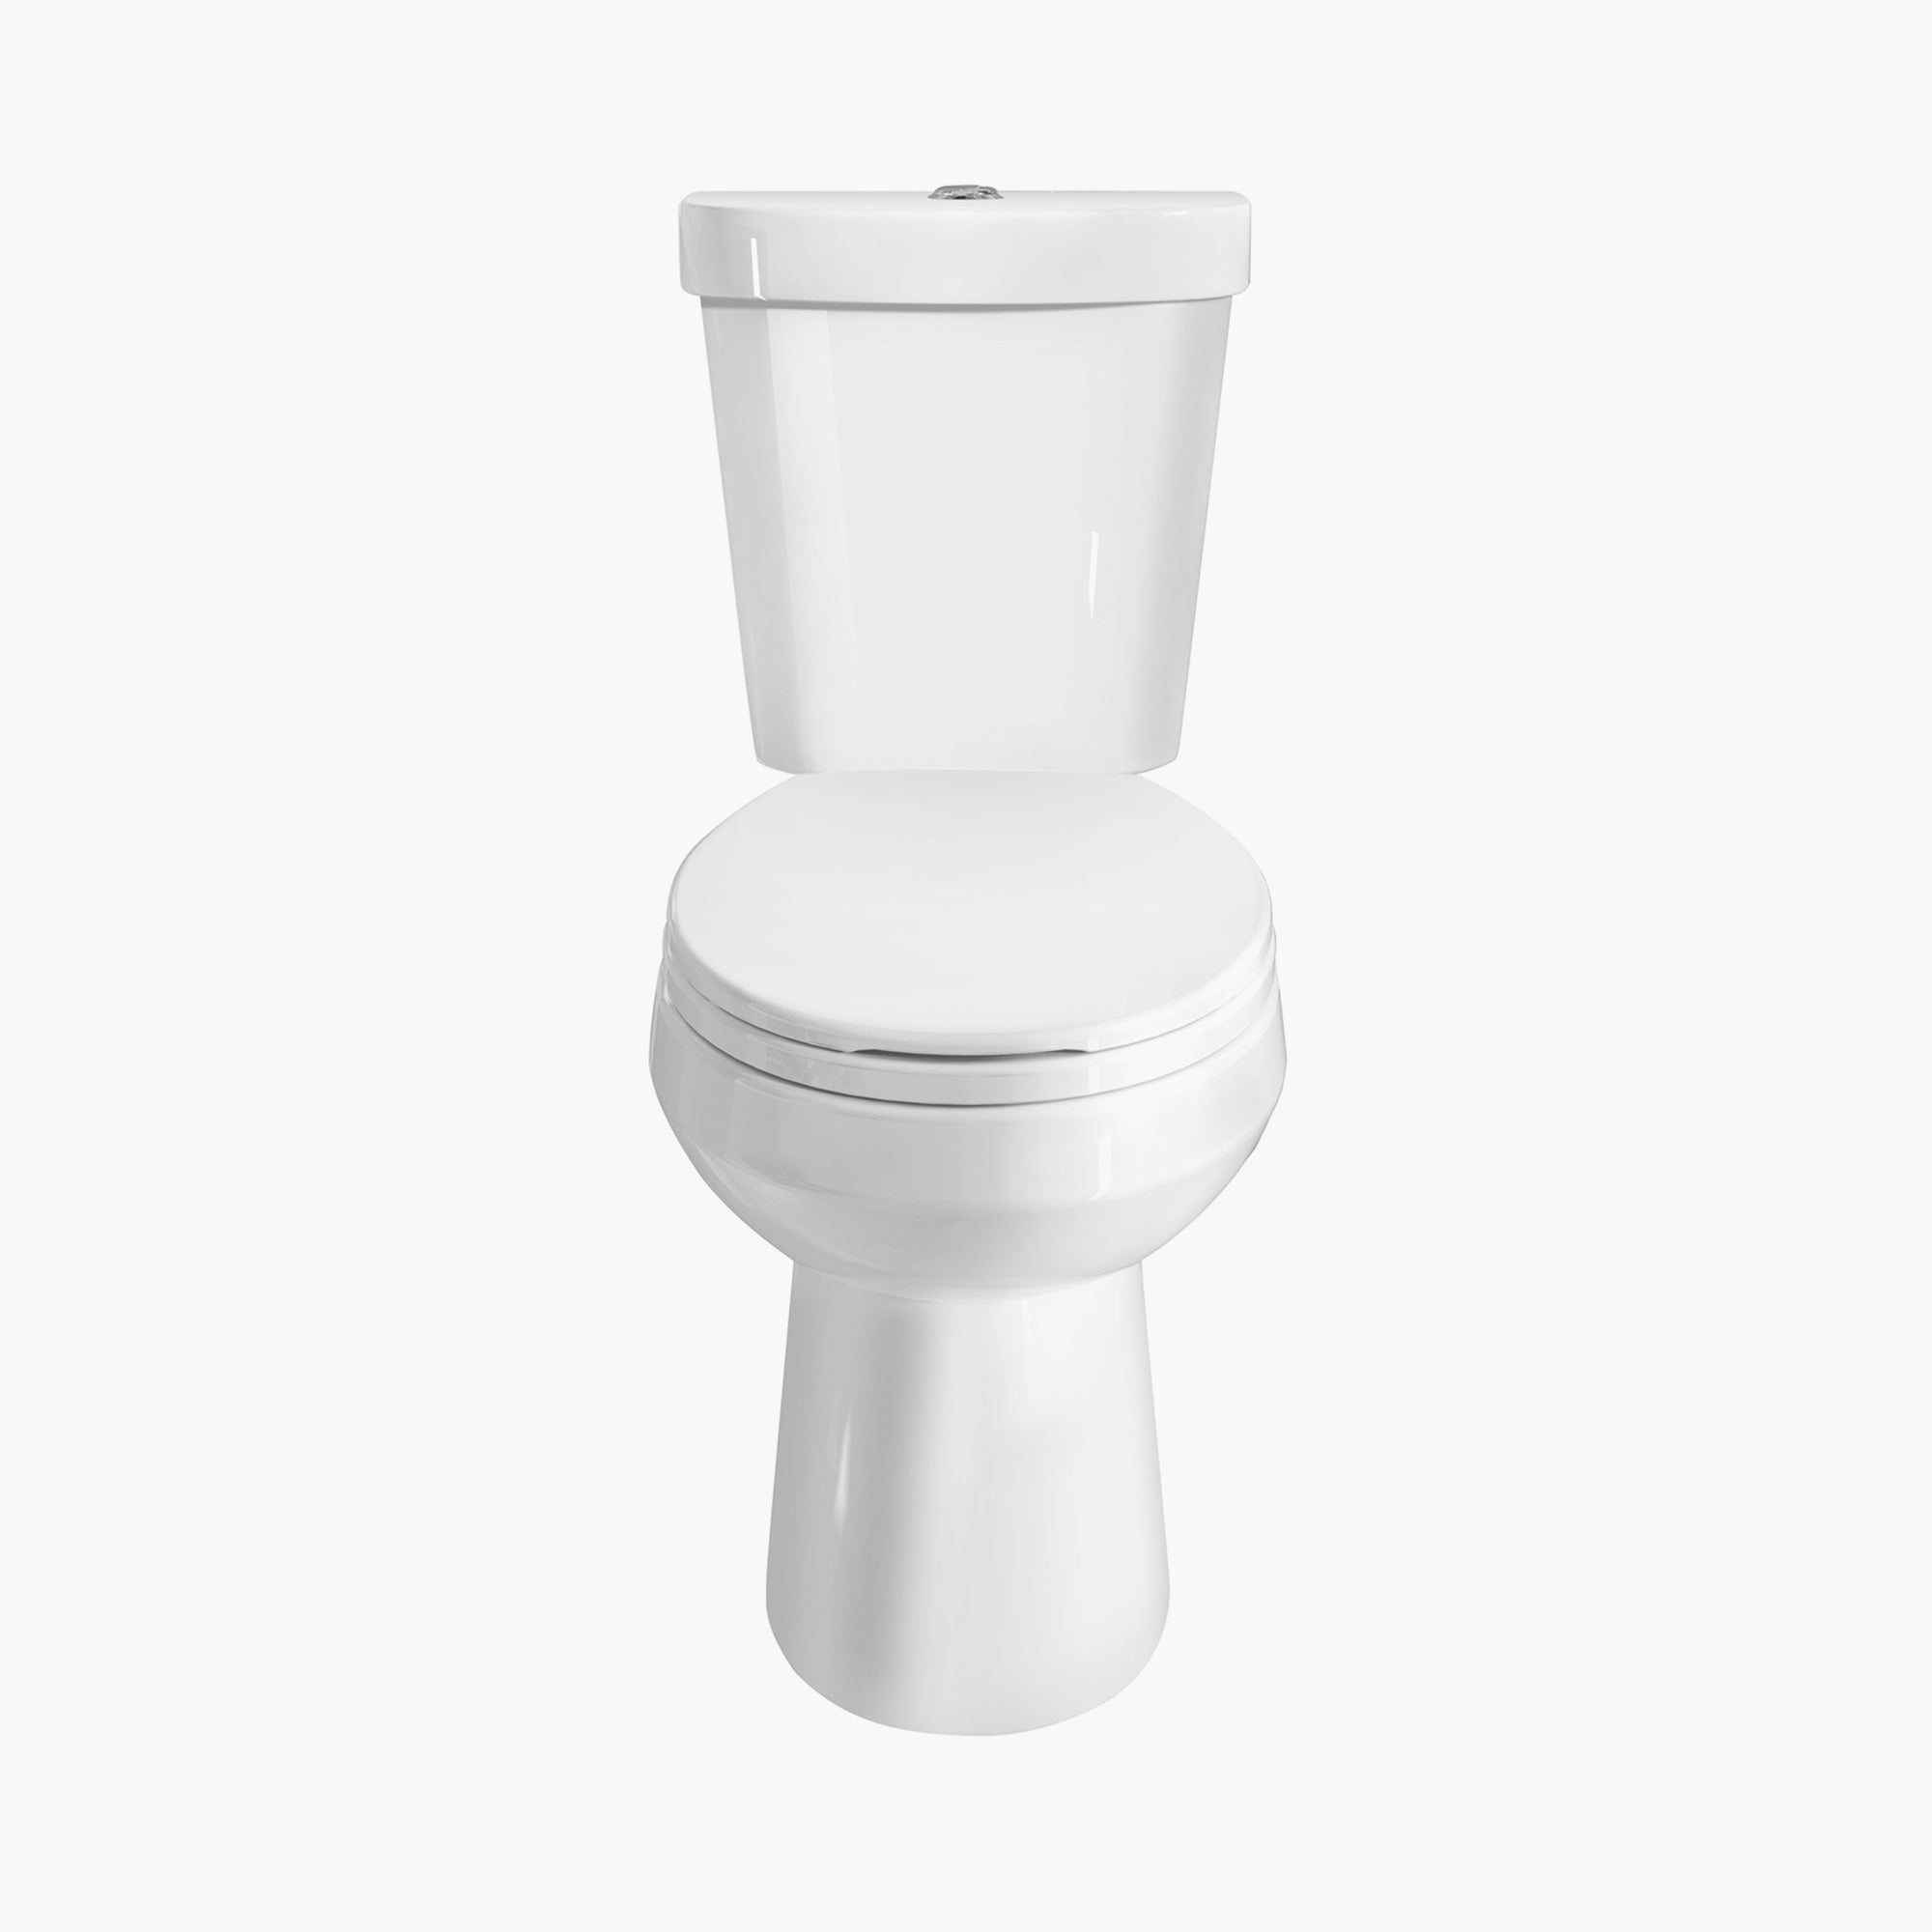 HOROW Dual Flush Round Toilet Floor Mounted Two Piece Toilet Model HWTT-R01D